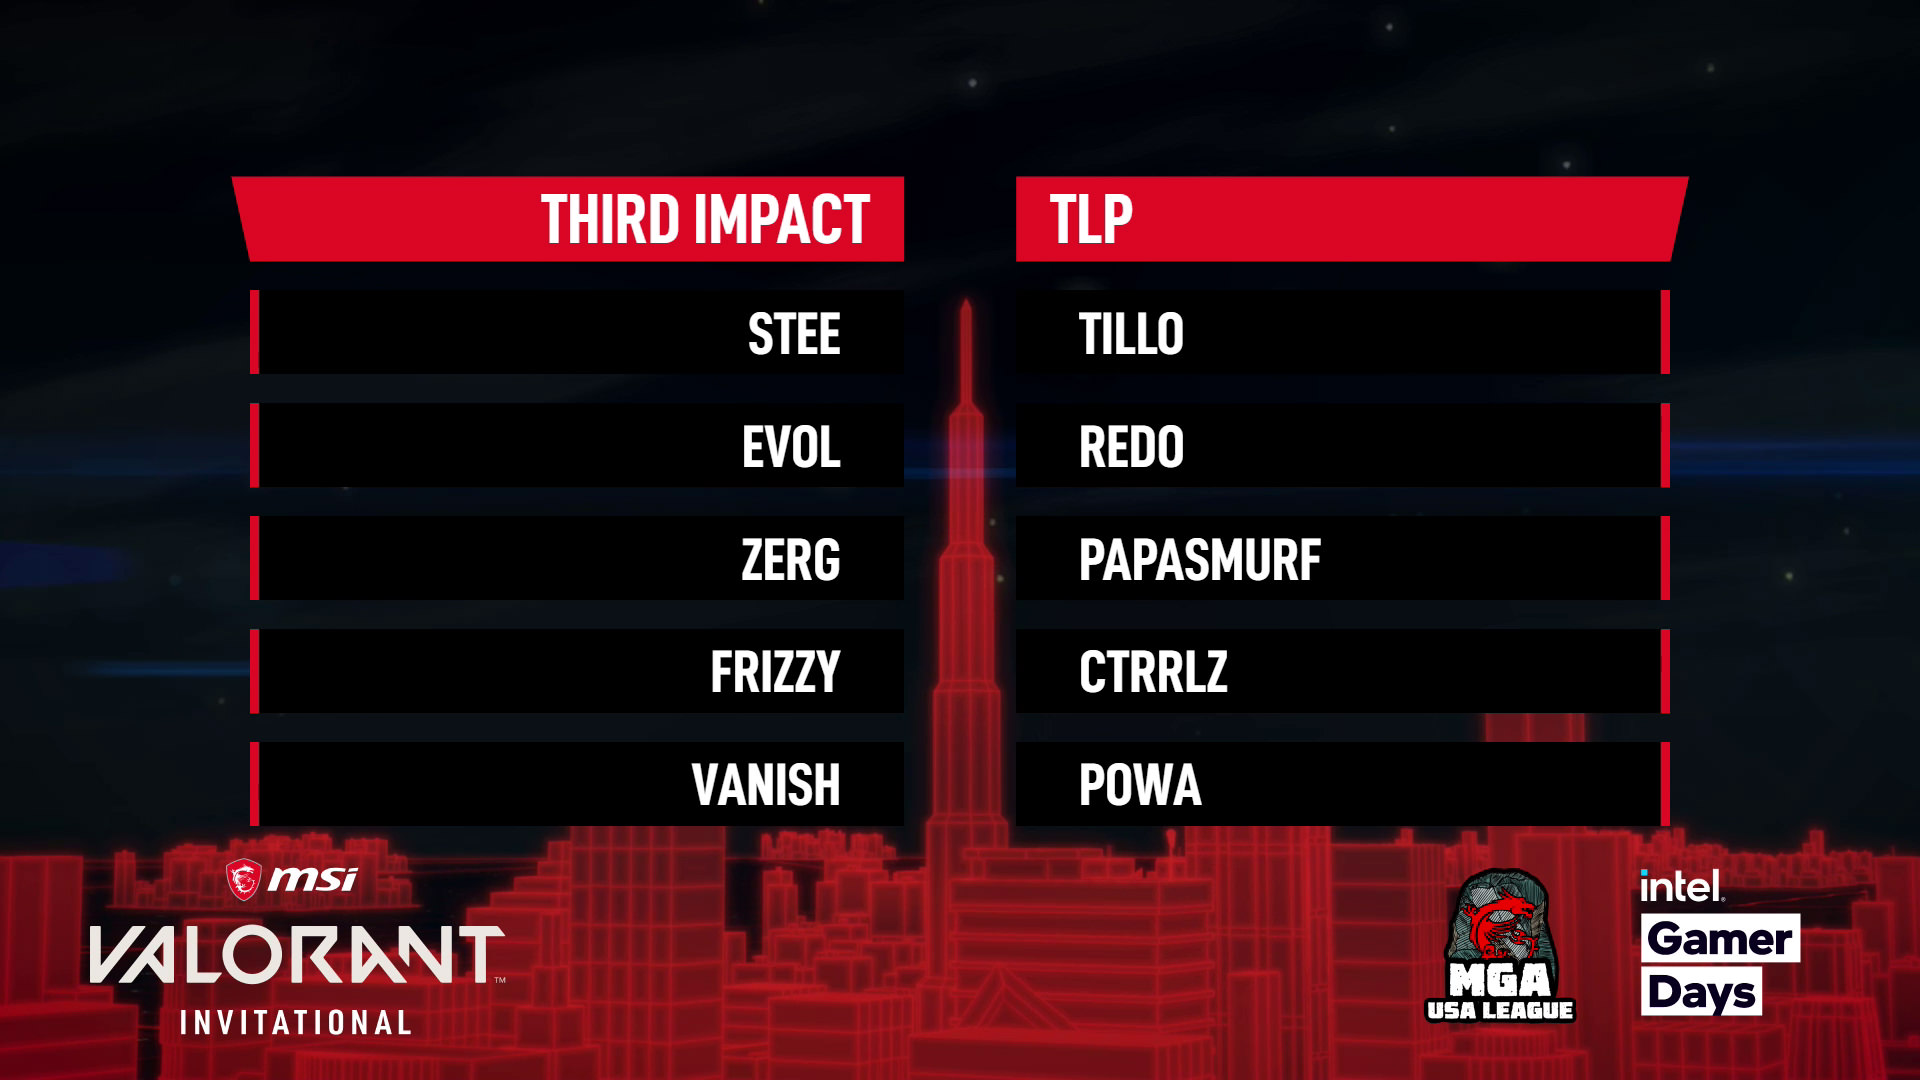 MSI VALORANT Invitational roster screenshot. Third Impact vs TLP.